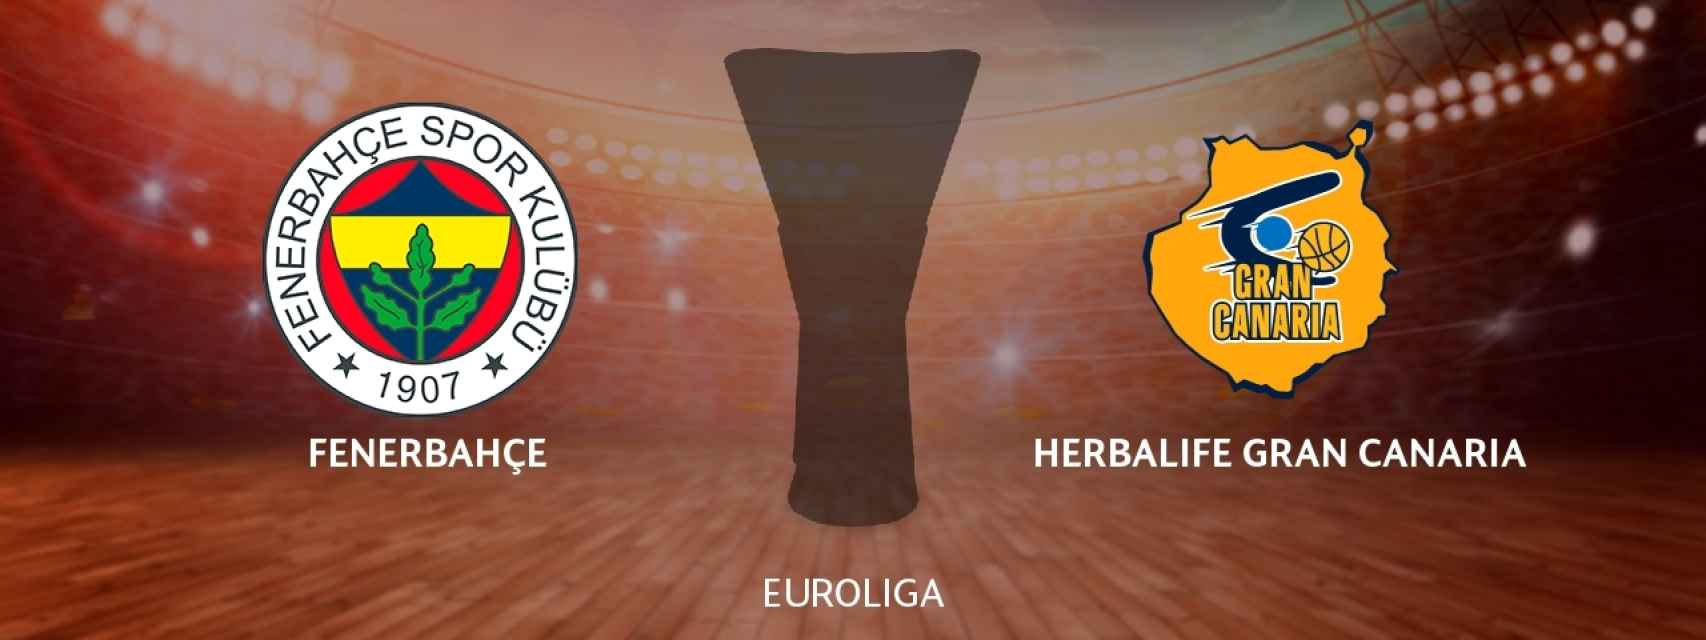 Fenerbahçe Istanbul - Herbalife Gran Canaria